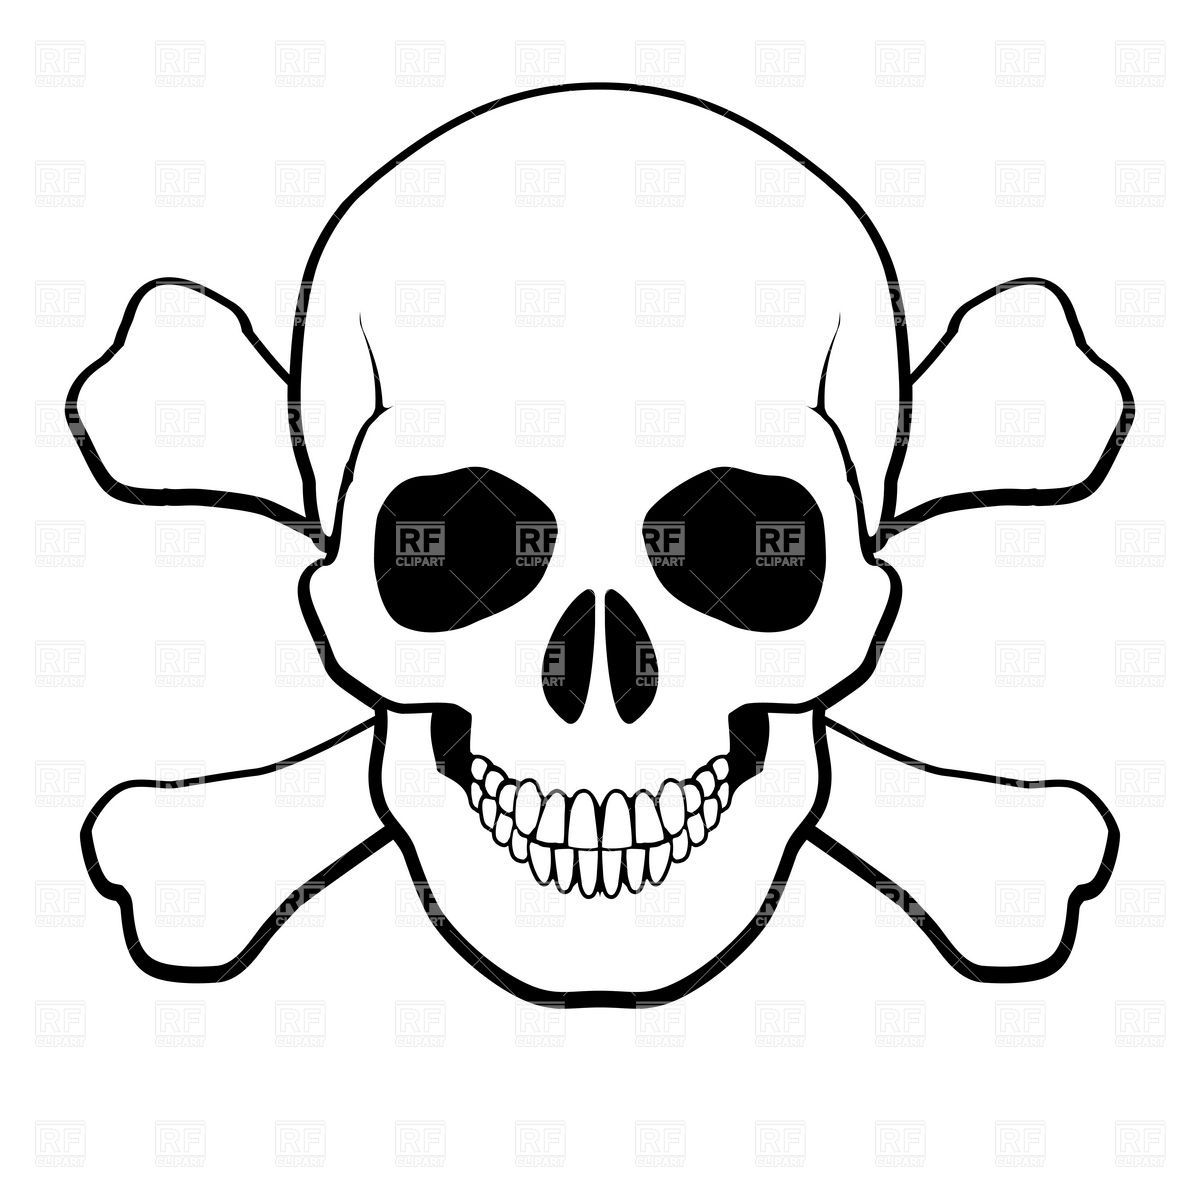 Danger Warning Sign   Skull And Crossbones 8296 Signs Symbols Maps